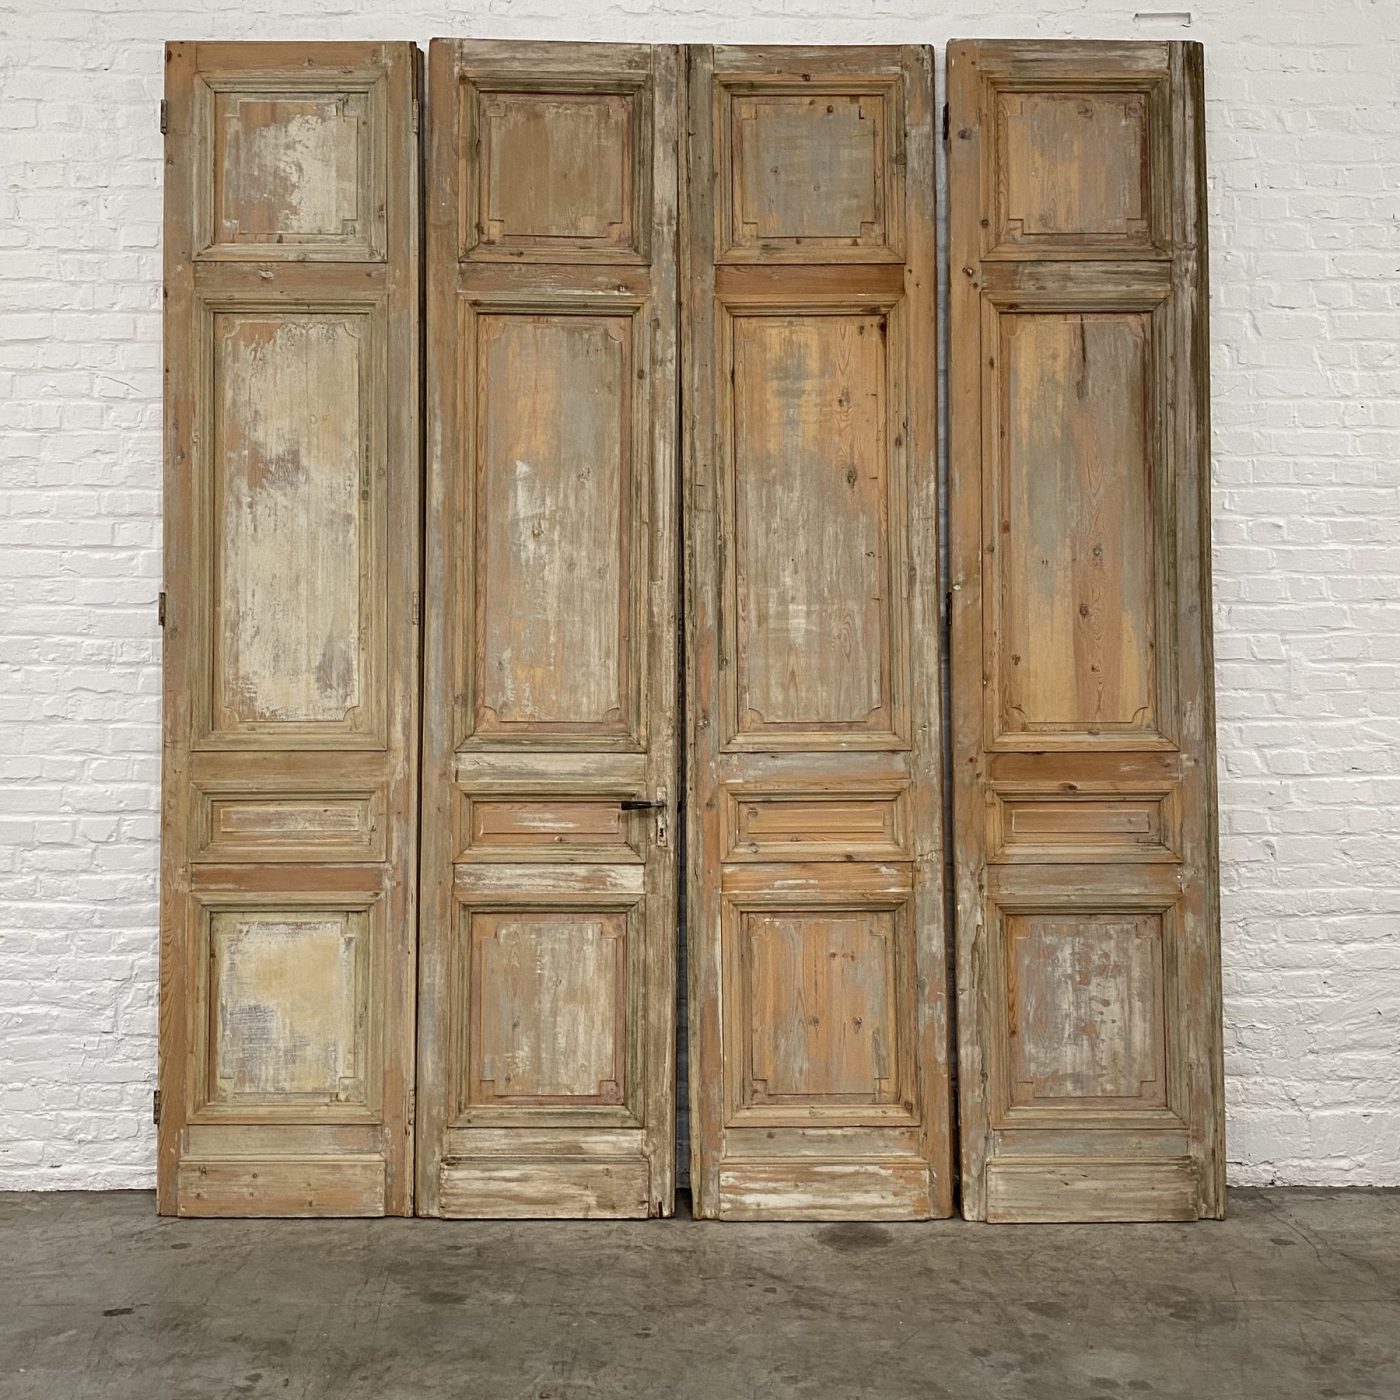 objet-vagabond-painted-doors0003